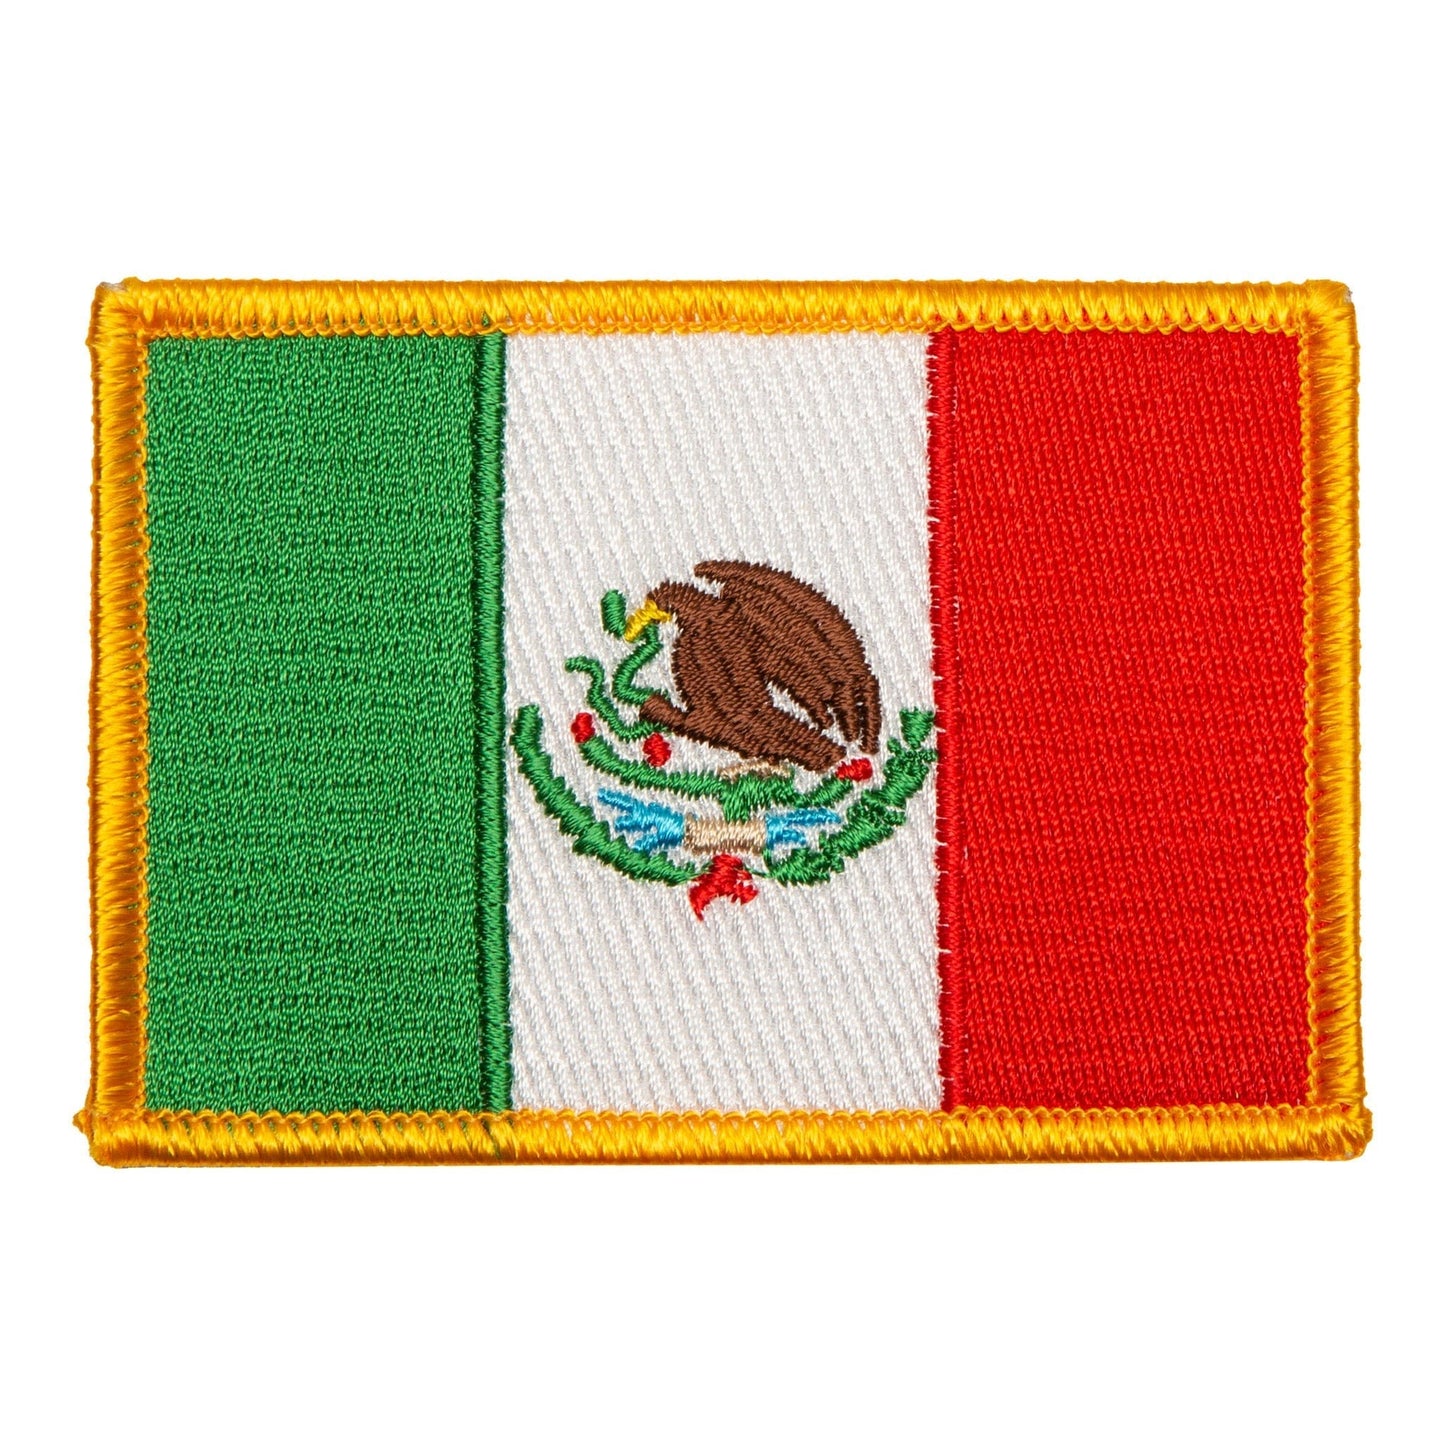 EclipseMartialArtsSupplies sporting goods Mexican Flag Patch Martial Arts Uniform Patch